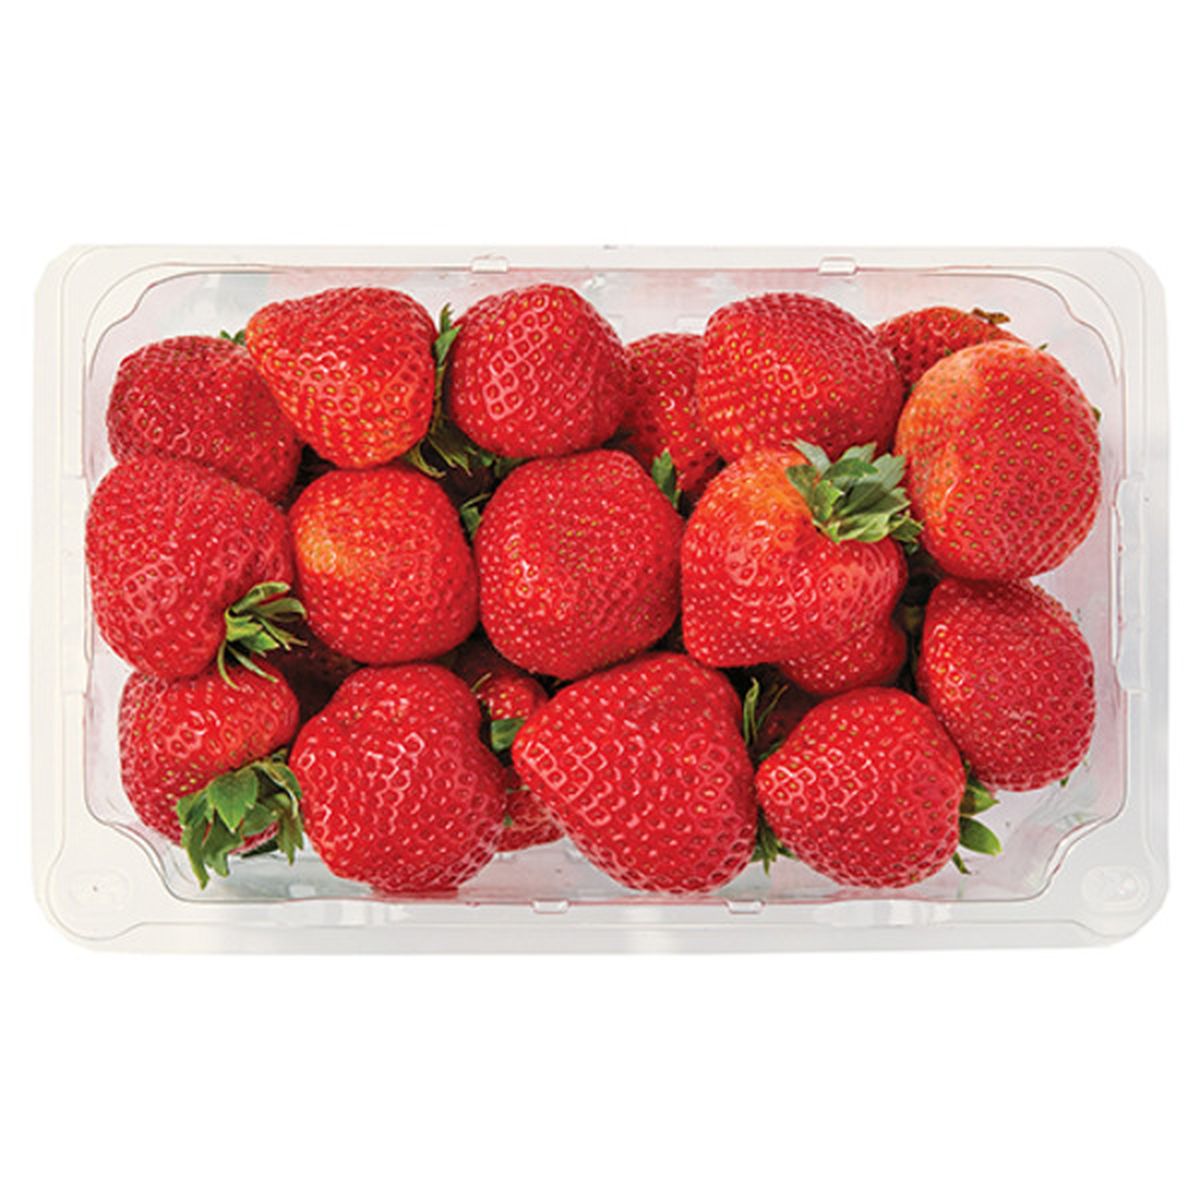 Calories in Strawberries